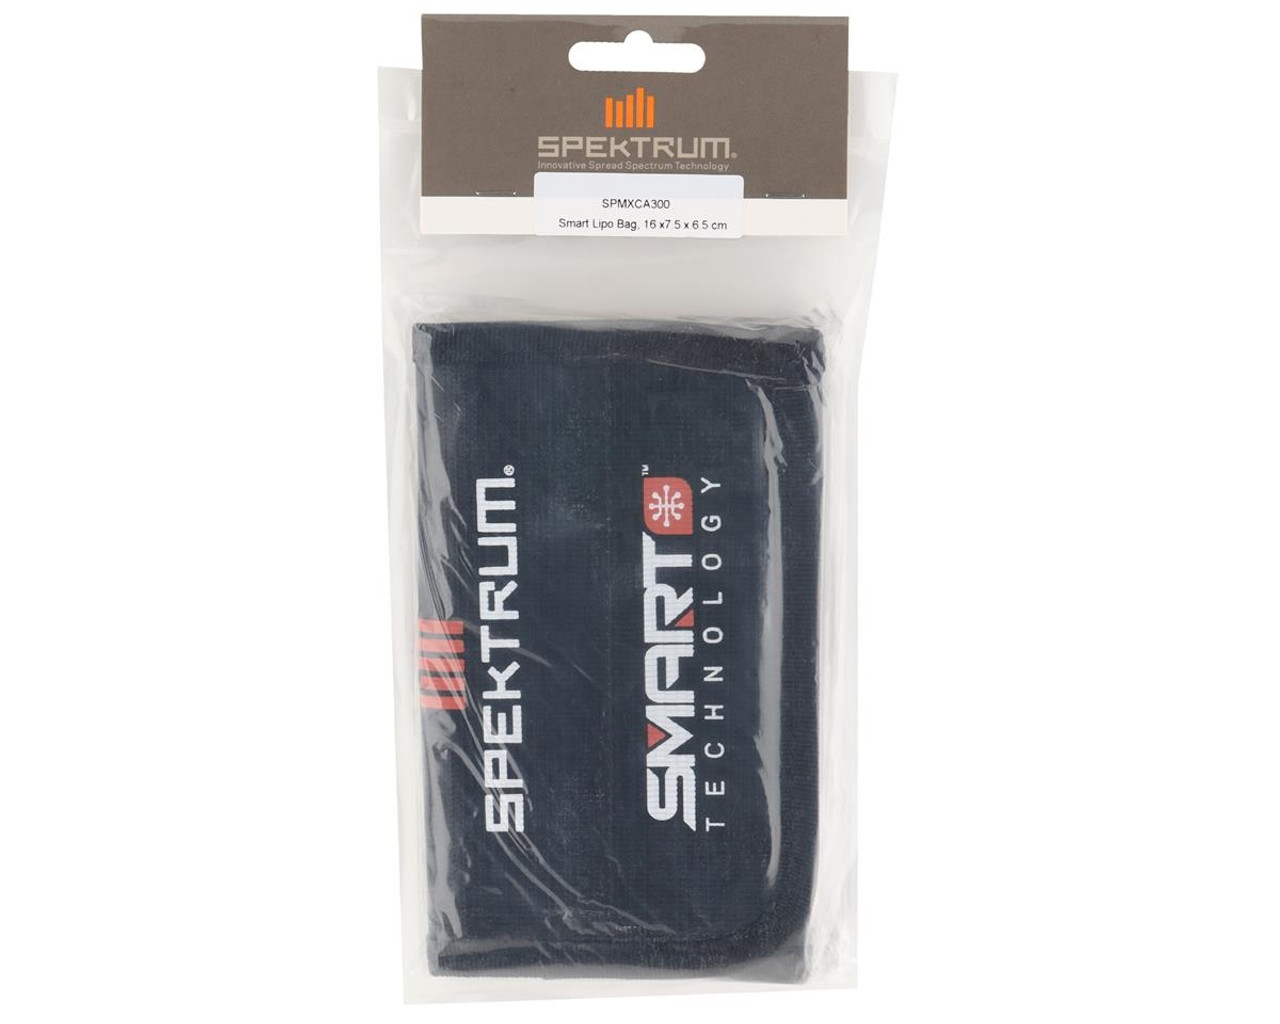 Spektrum RC Smart Lipo Charge Bag (16x7.5x6.5cm)